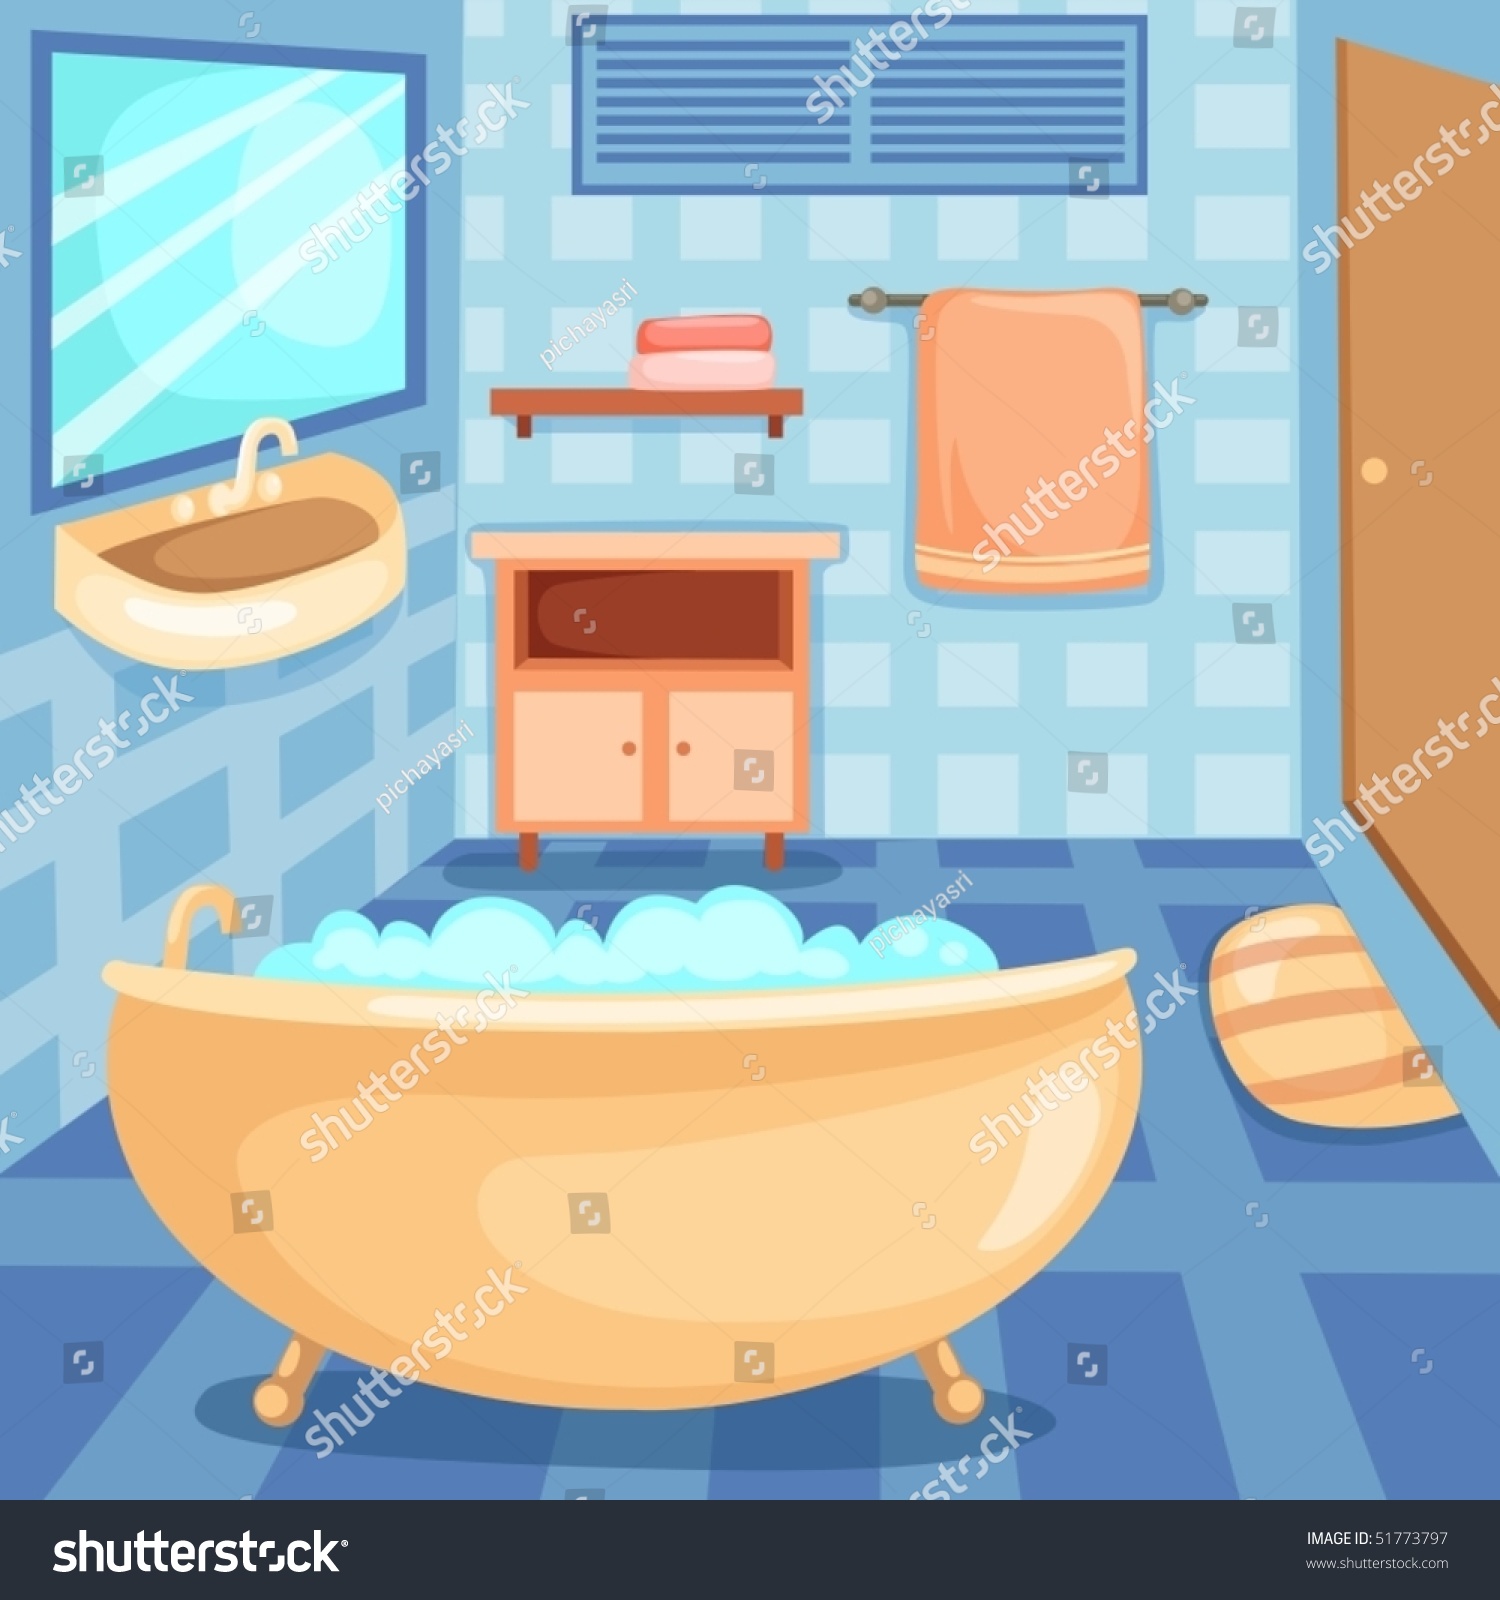 stock vector illustration of cartoon interior of a bathroom 51773797